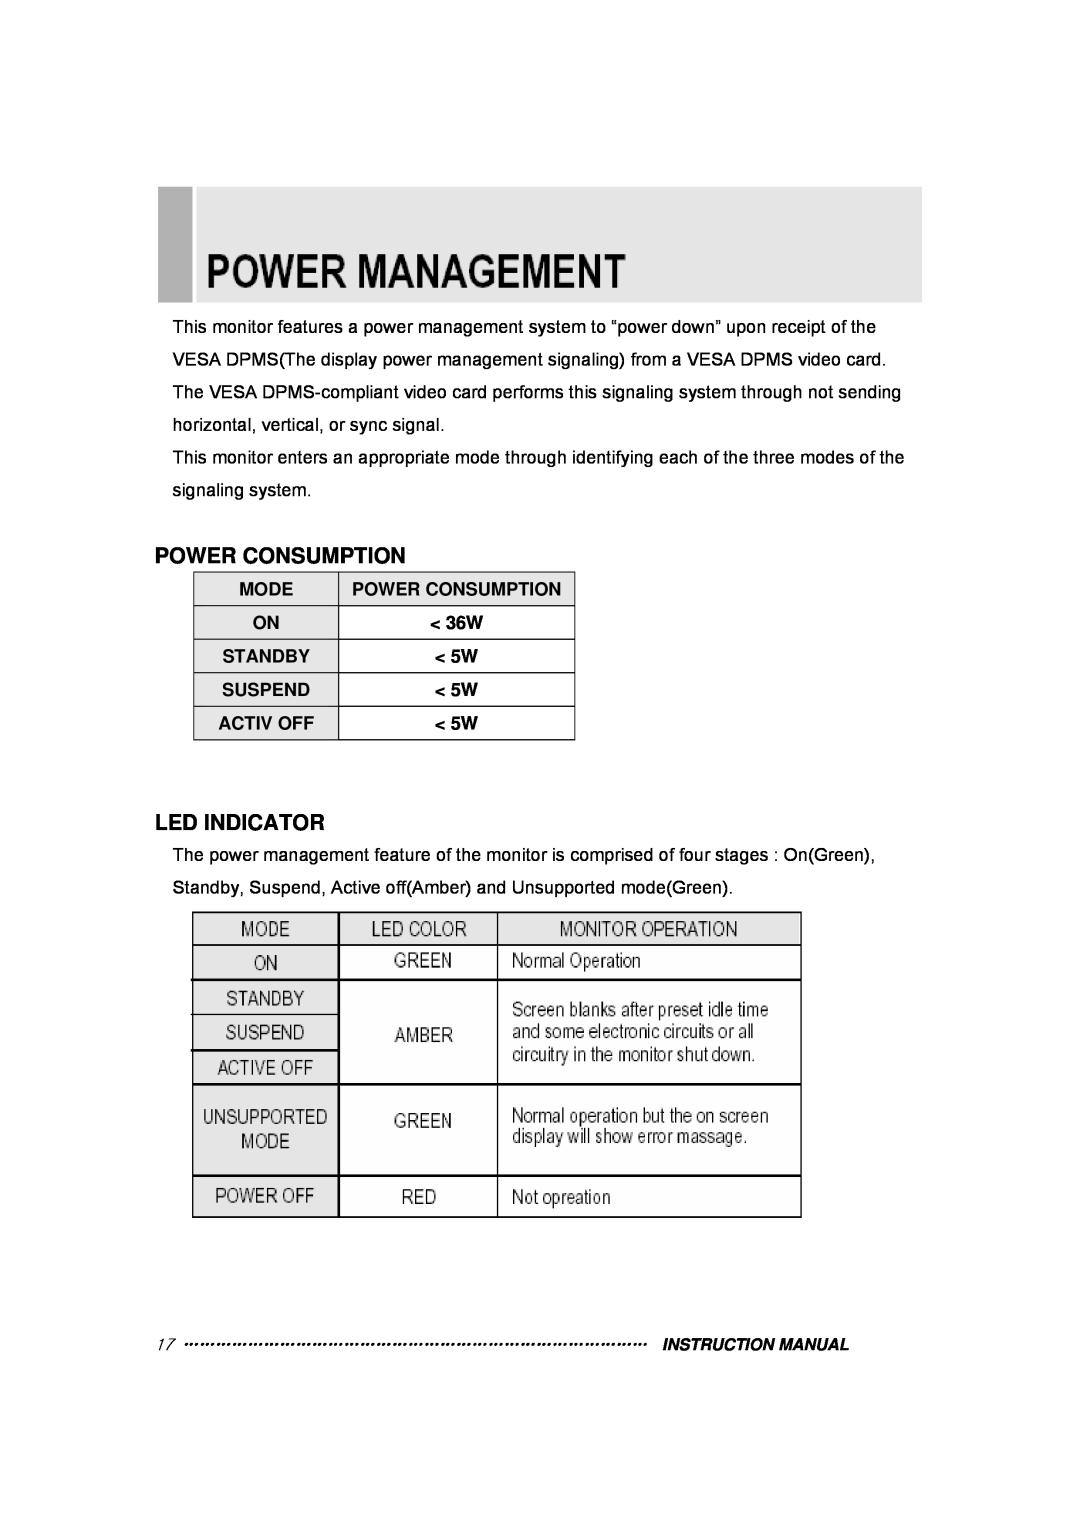 TOA Electronics 15RTV instruction manual Power Consumption, Led Indicator, Mode, Standby, Suspend, Activ Off 